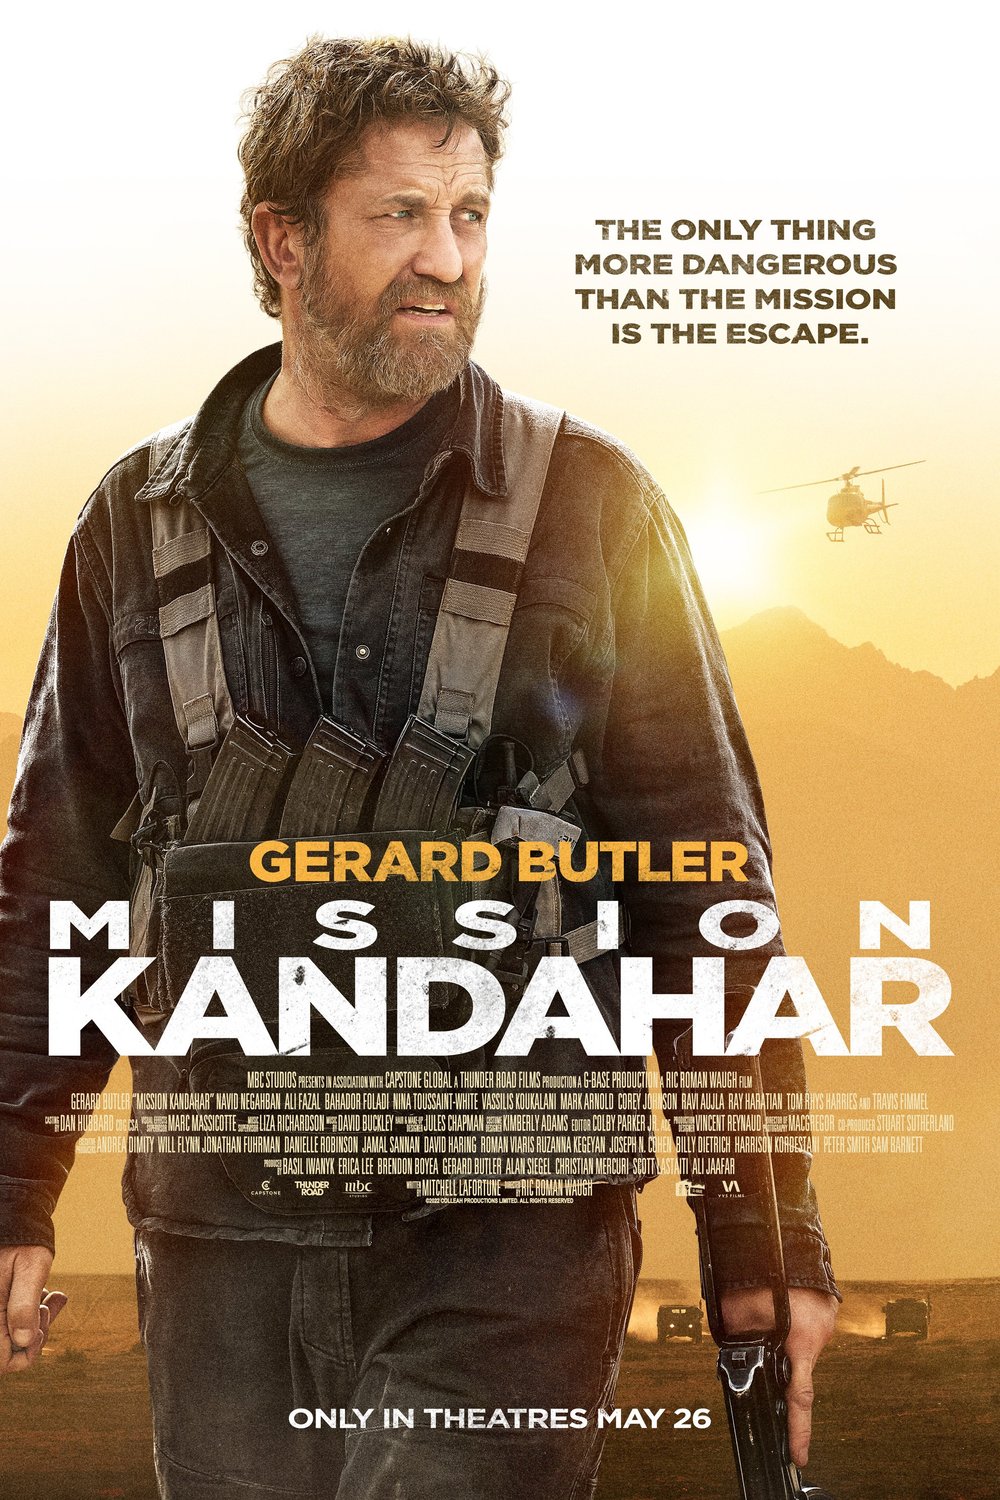 movie review for kandahar